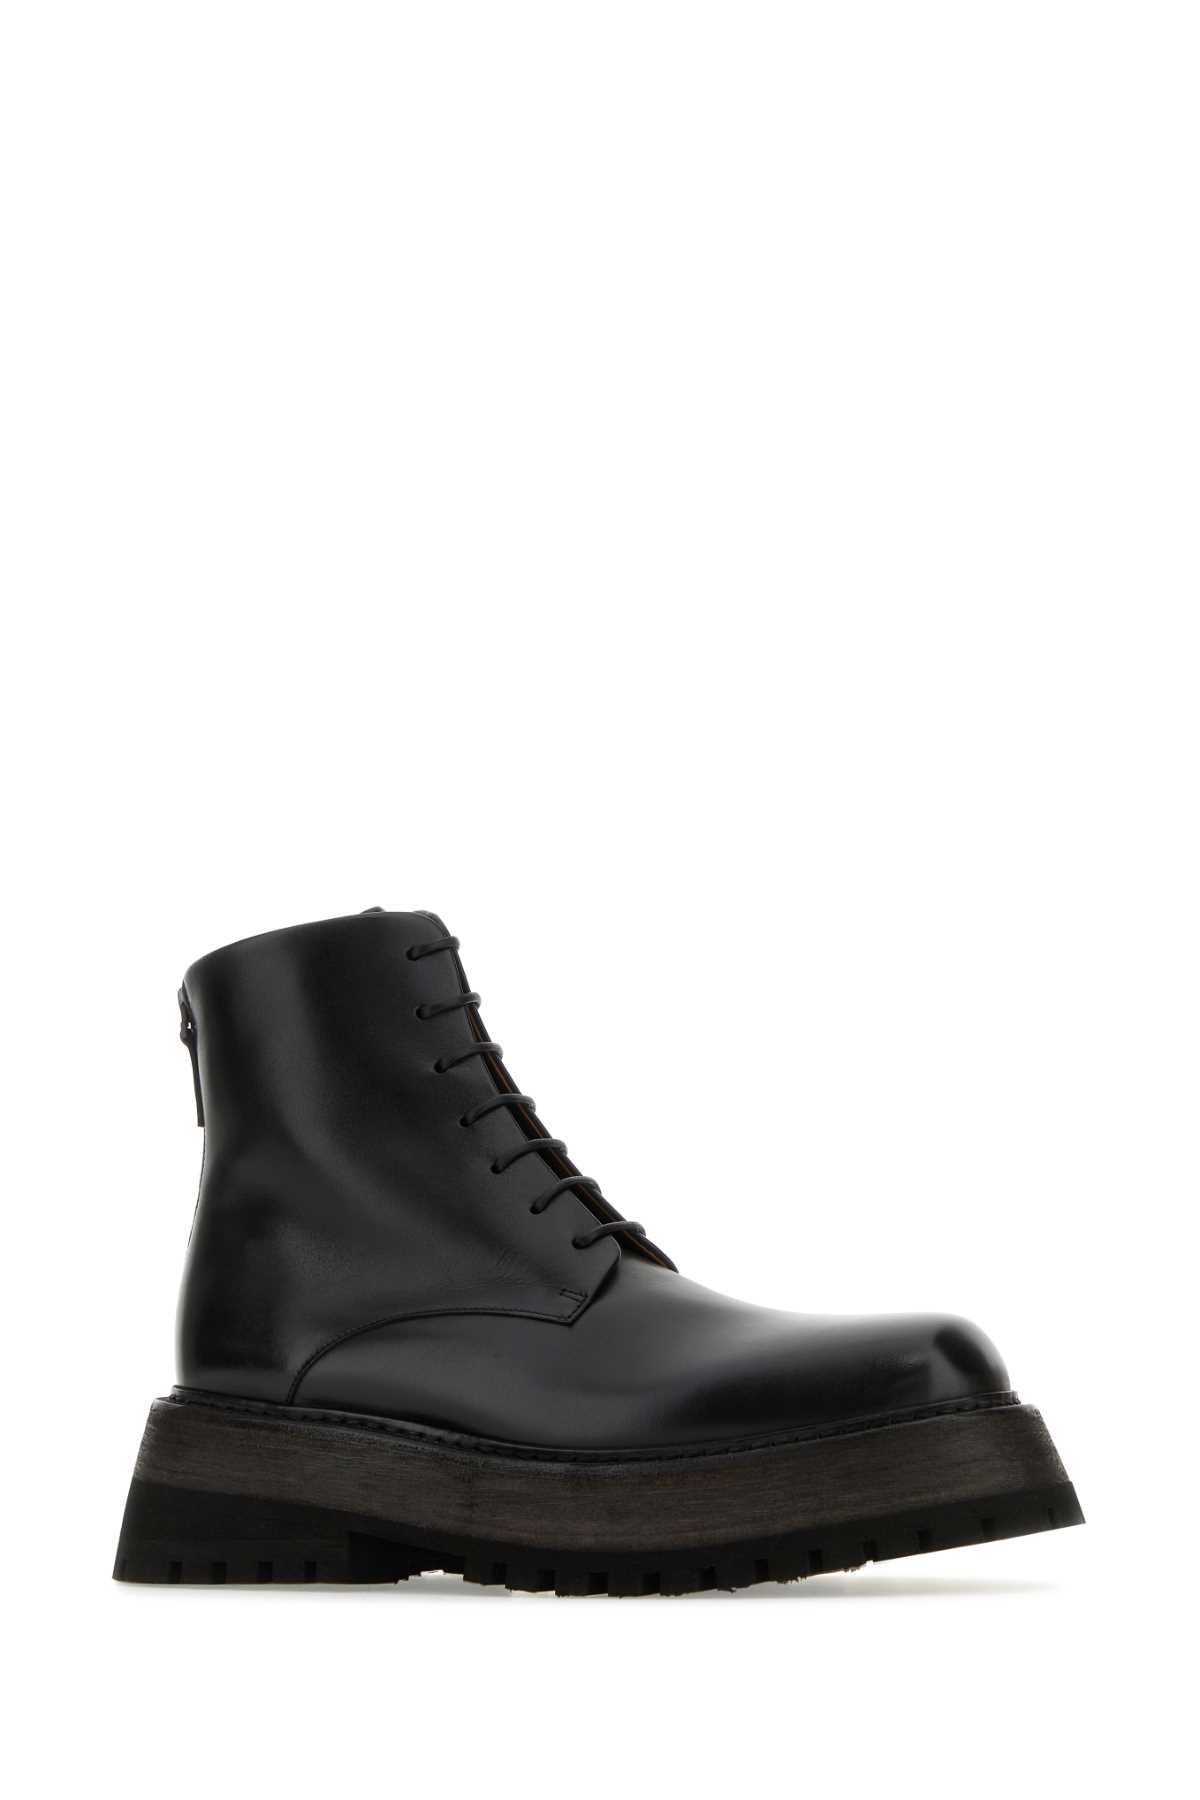 Shop Marsèll Black Leather Ankle Boots